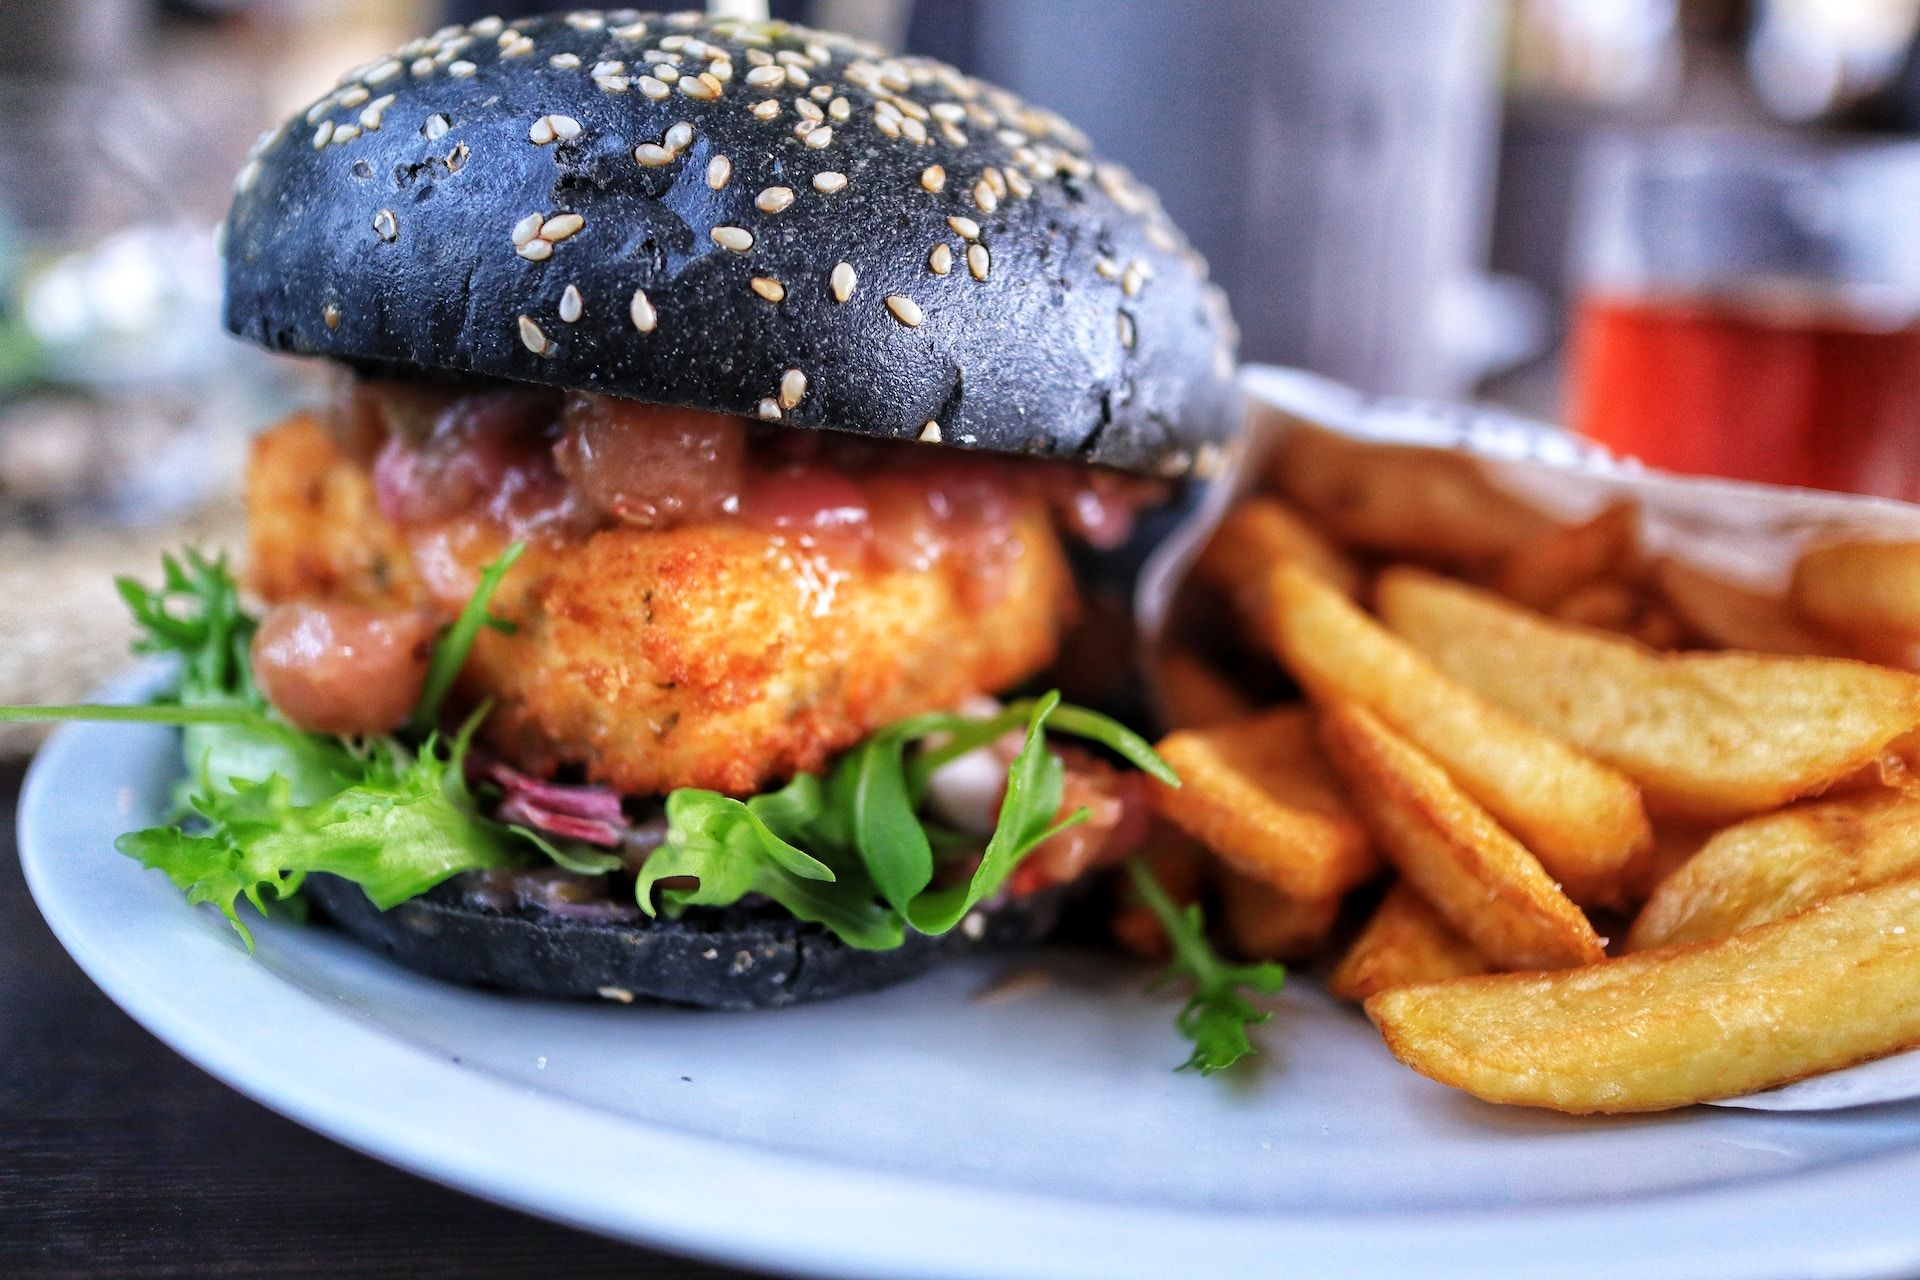 A burger with black buns